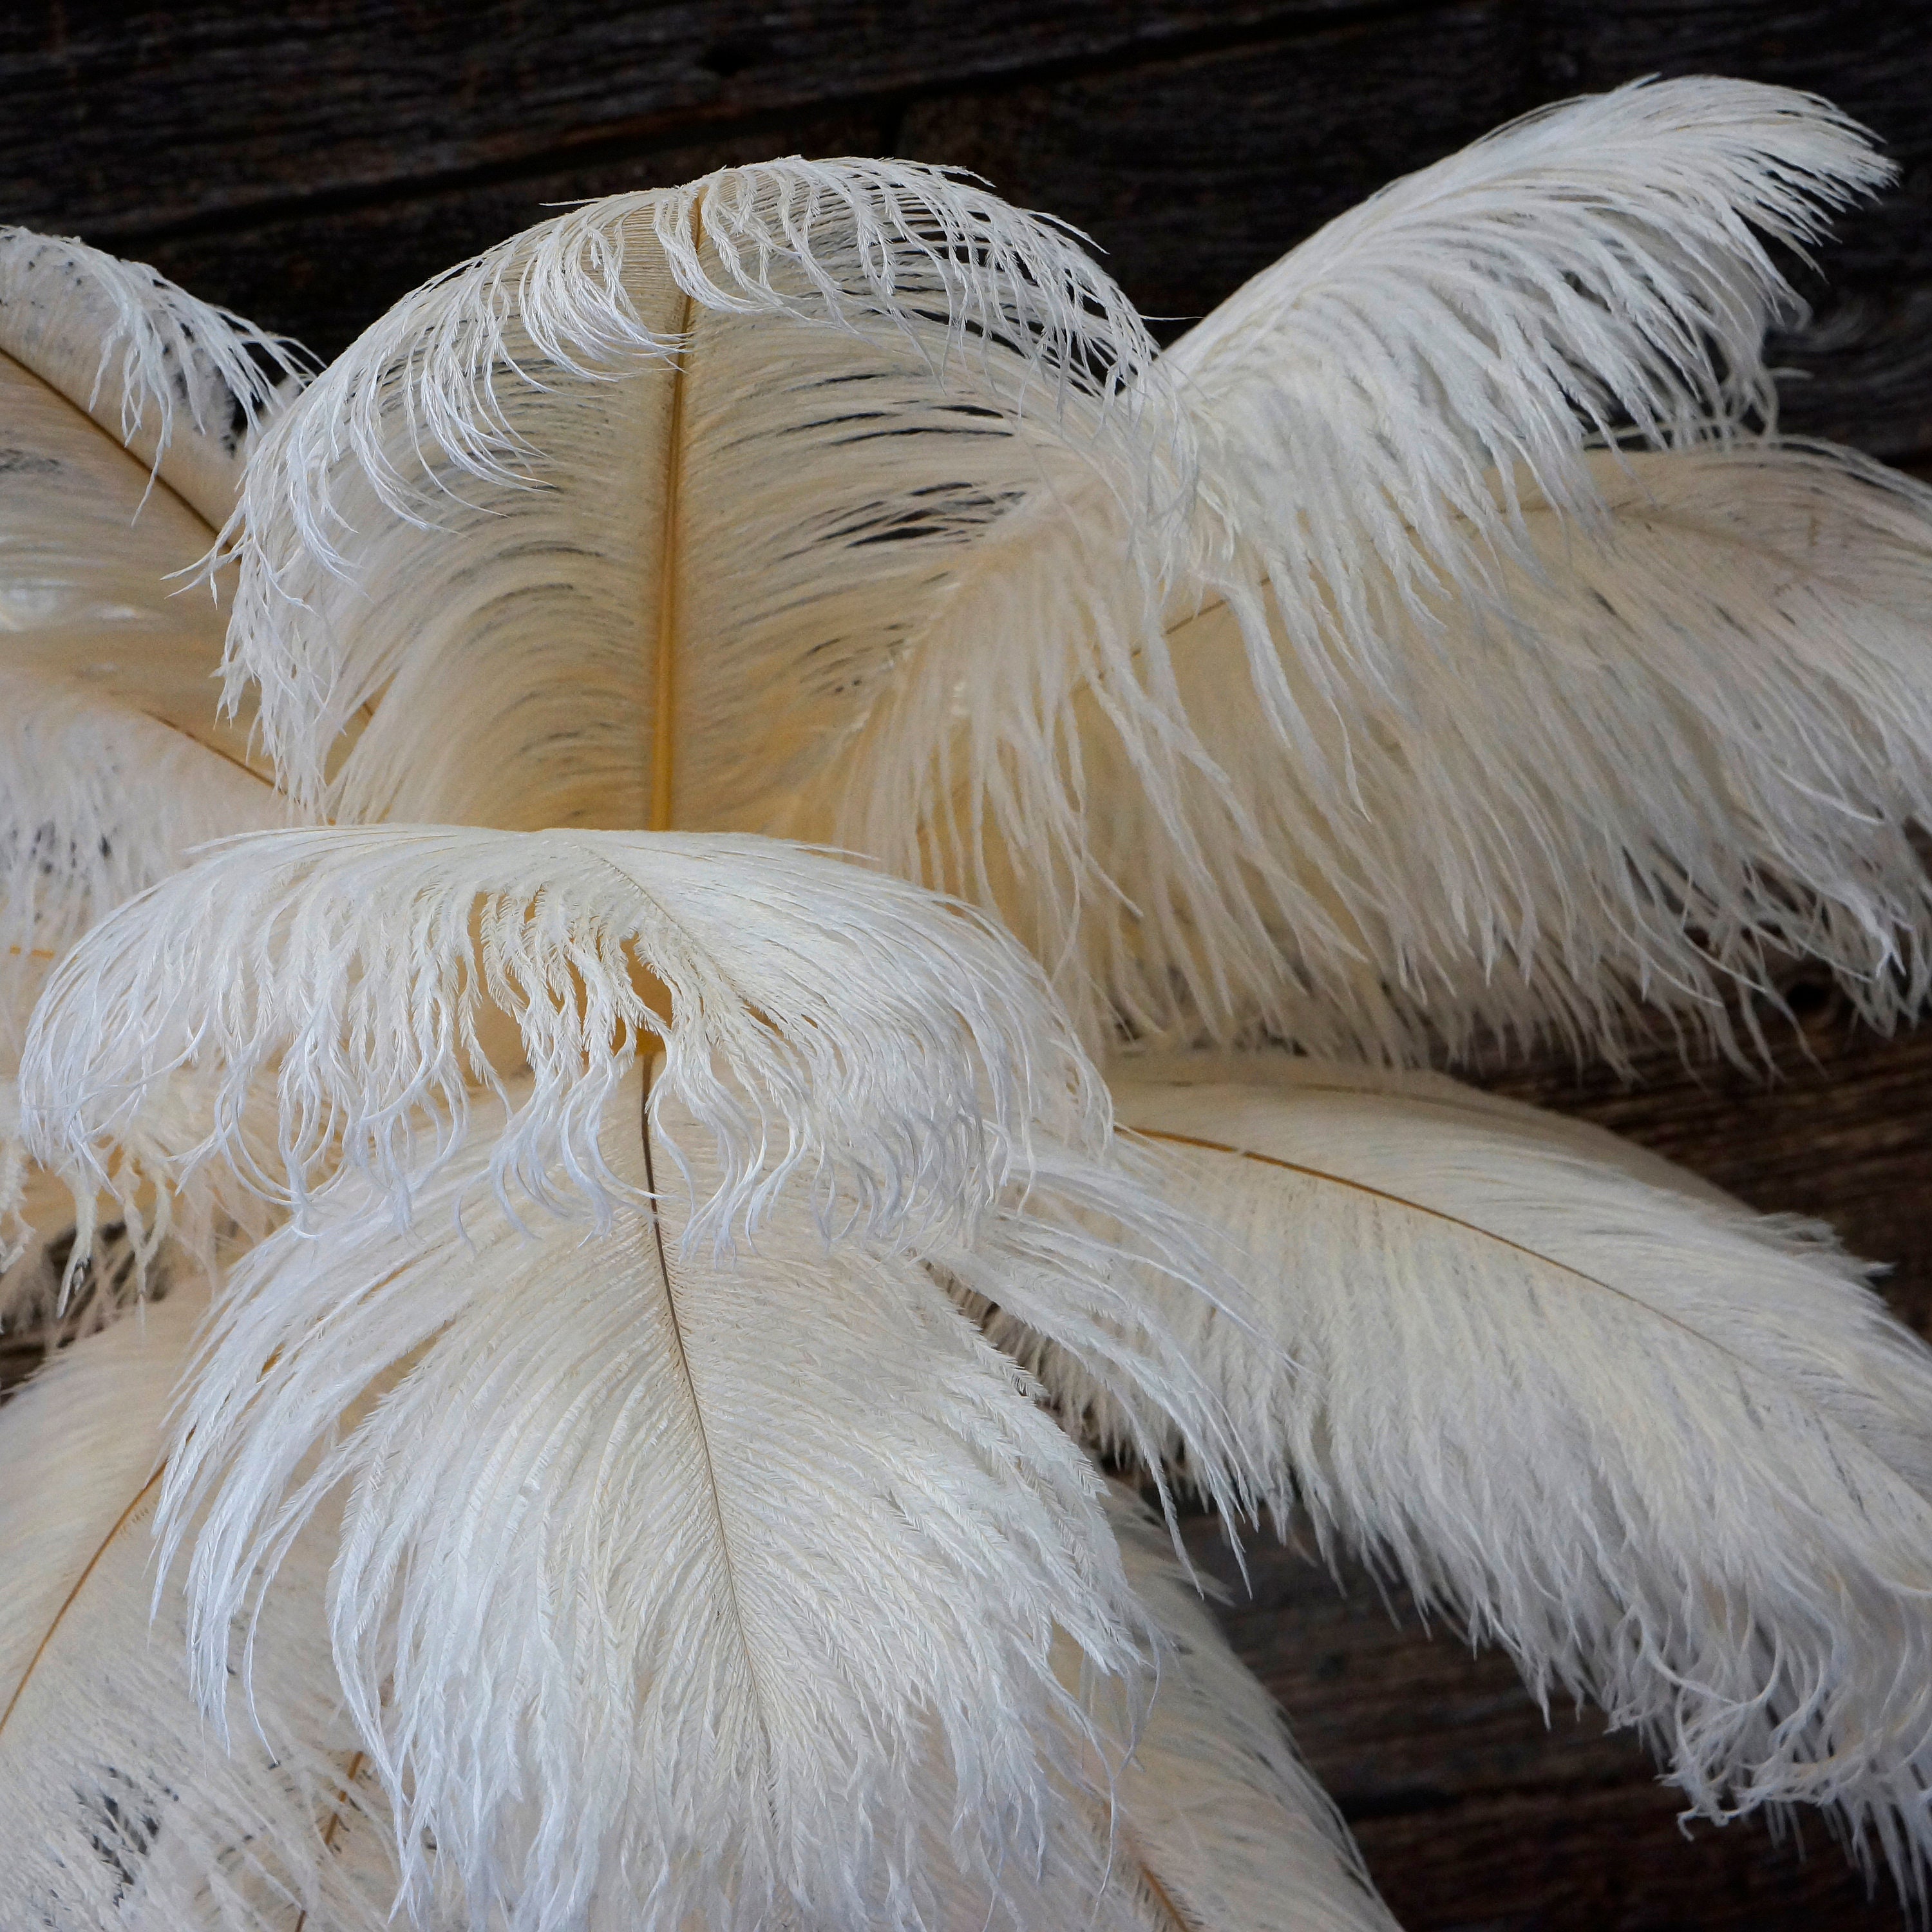 Black Ostrich Feathers/Plumes Wholesale 16-18 inch 12 Pieces Dozen Bulk  Wedding Centerpieces Crafts, arts DIY stage and events decoration